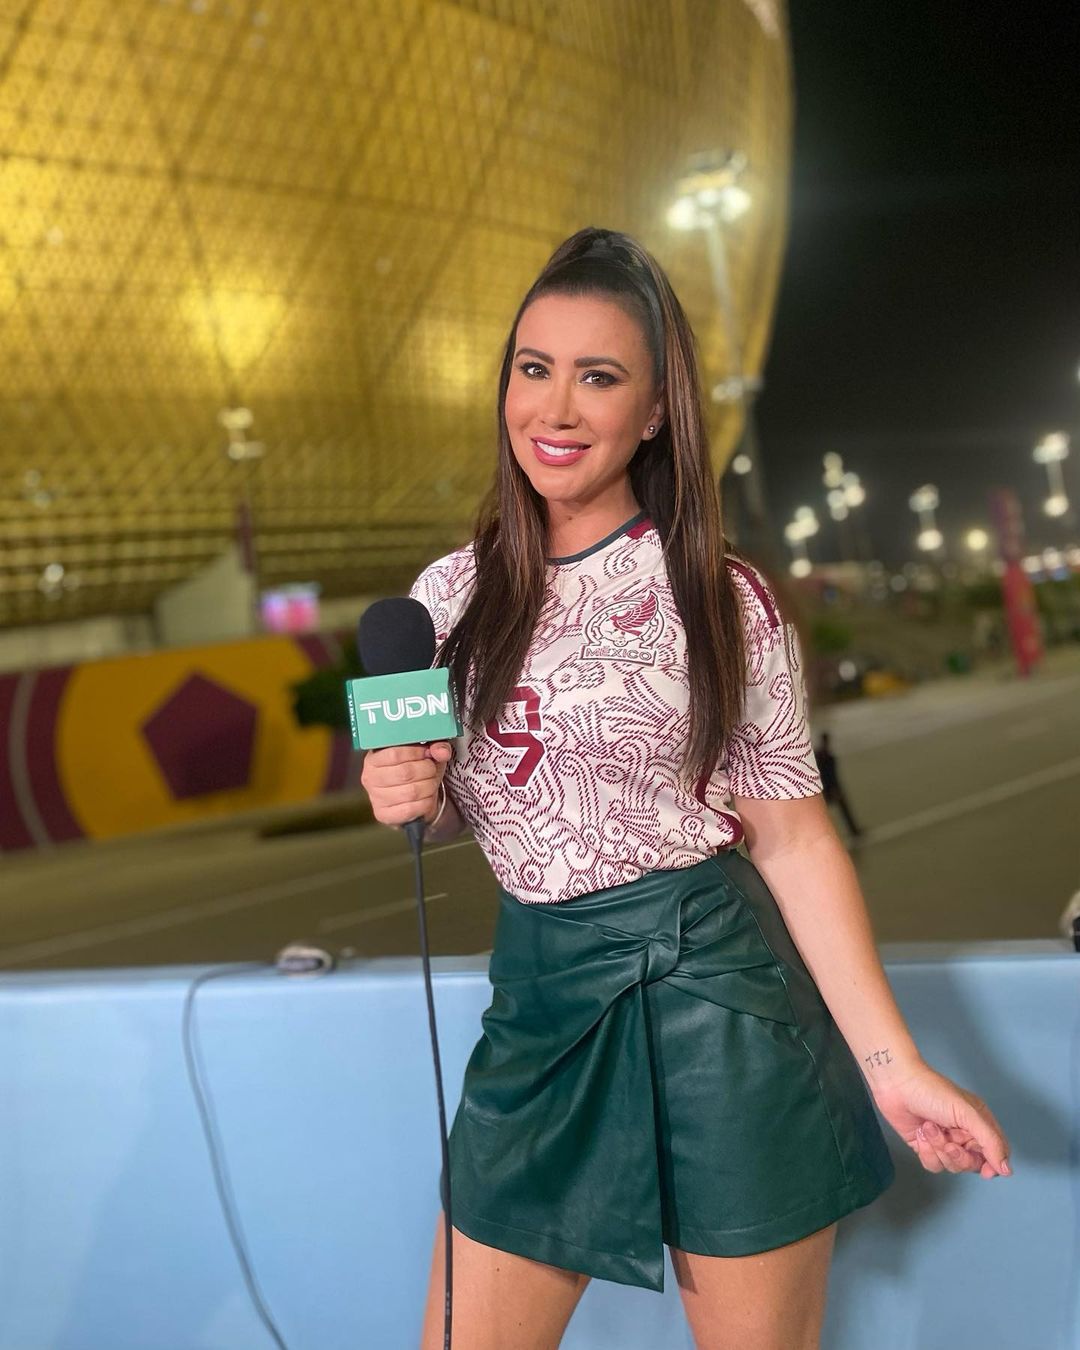 Mariazel covering the 2022 Qatar World Cup (Instagram/mariazelzel)